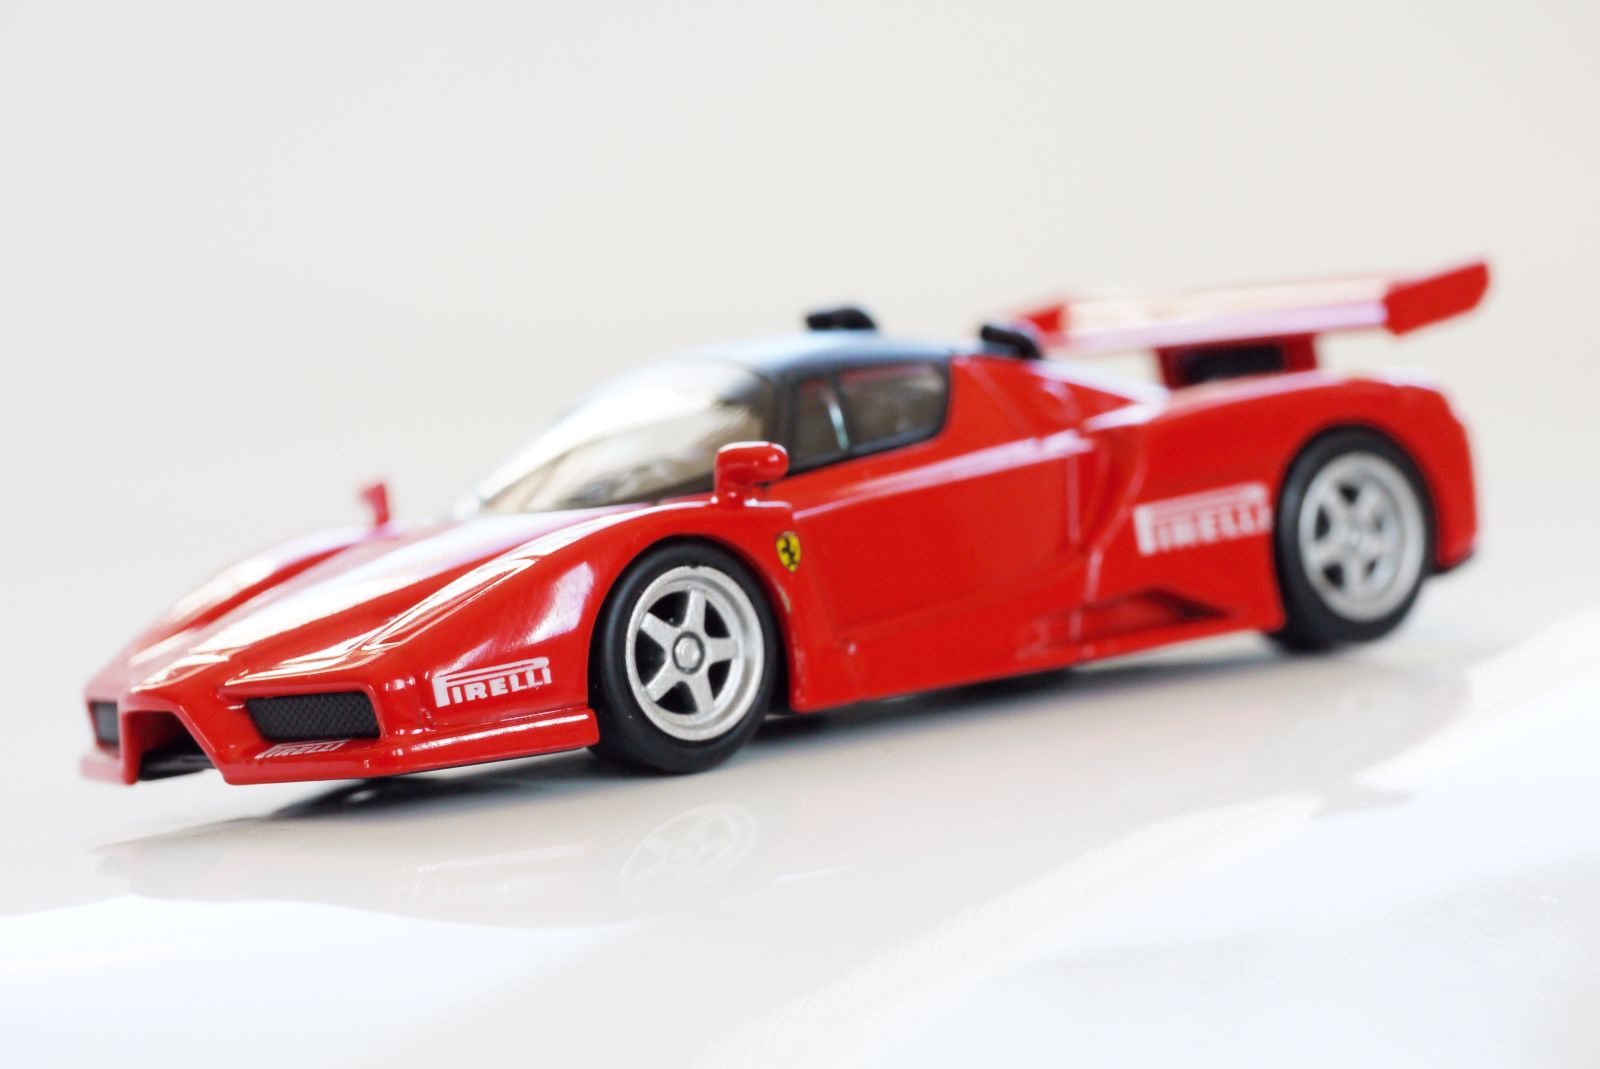 Illustration for article titled Kyosho Ferrari 8 1/64 #51 - Project Prancing Horse #51 - 2003 Ferrari Enzo GT Concept test car